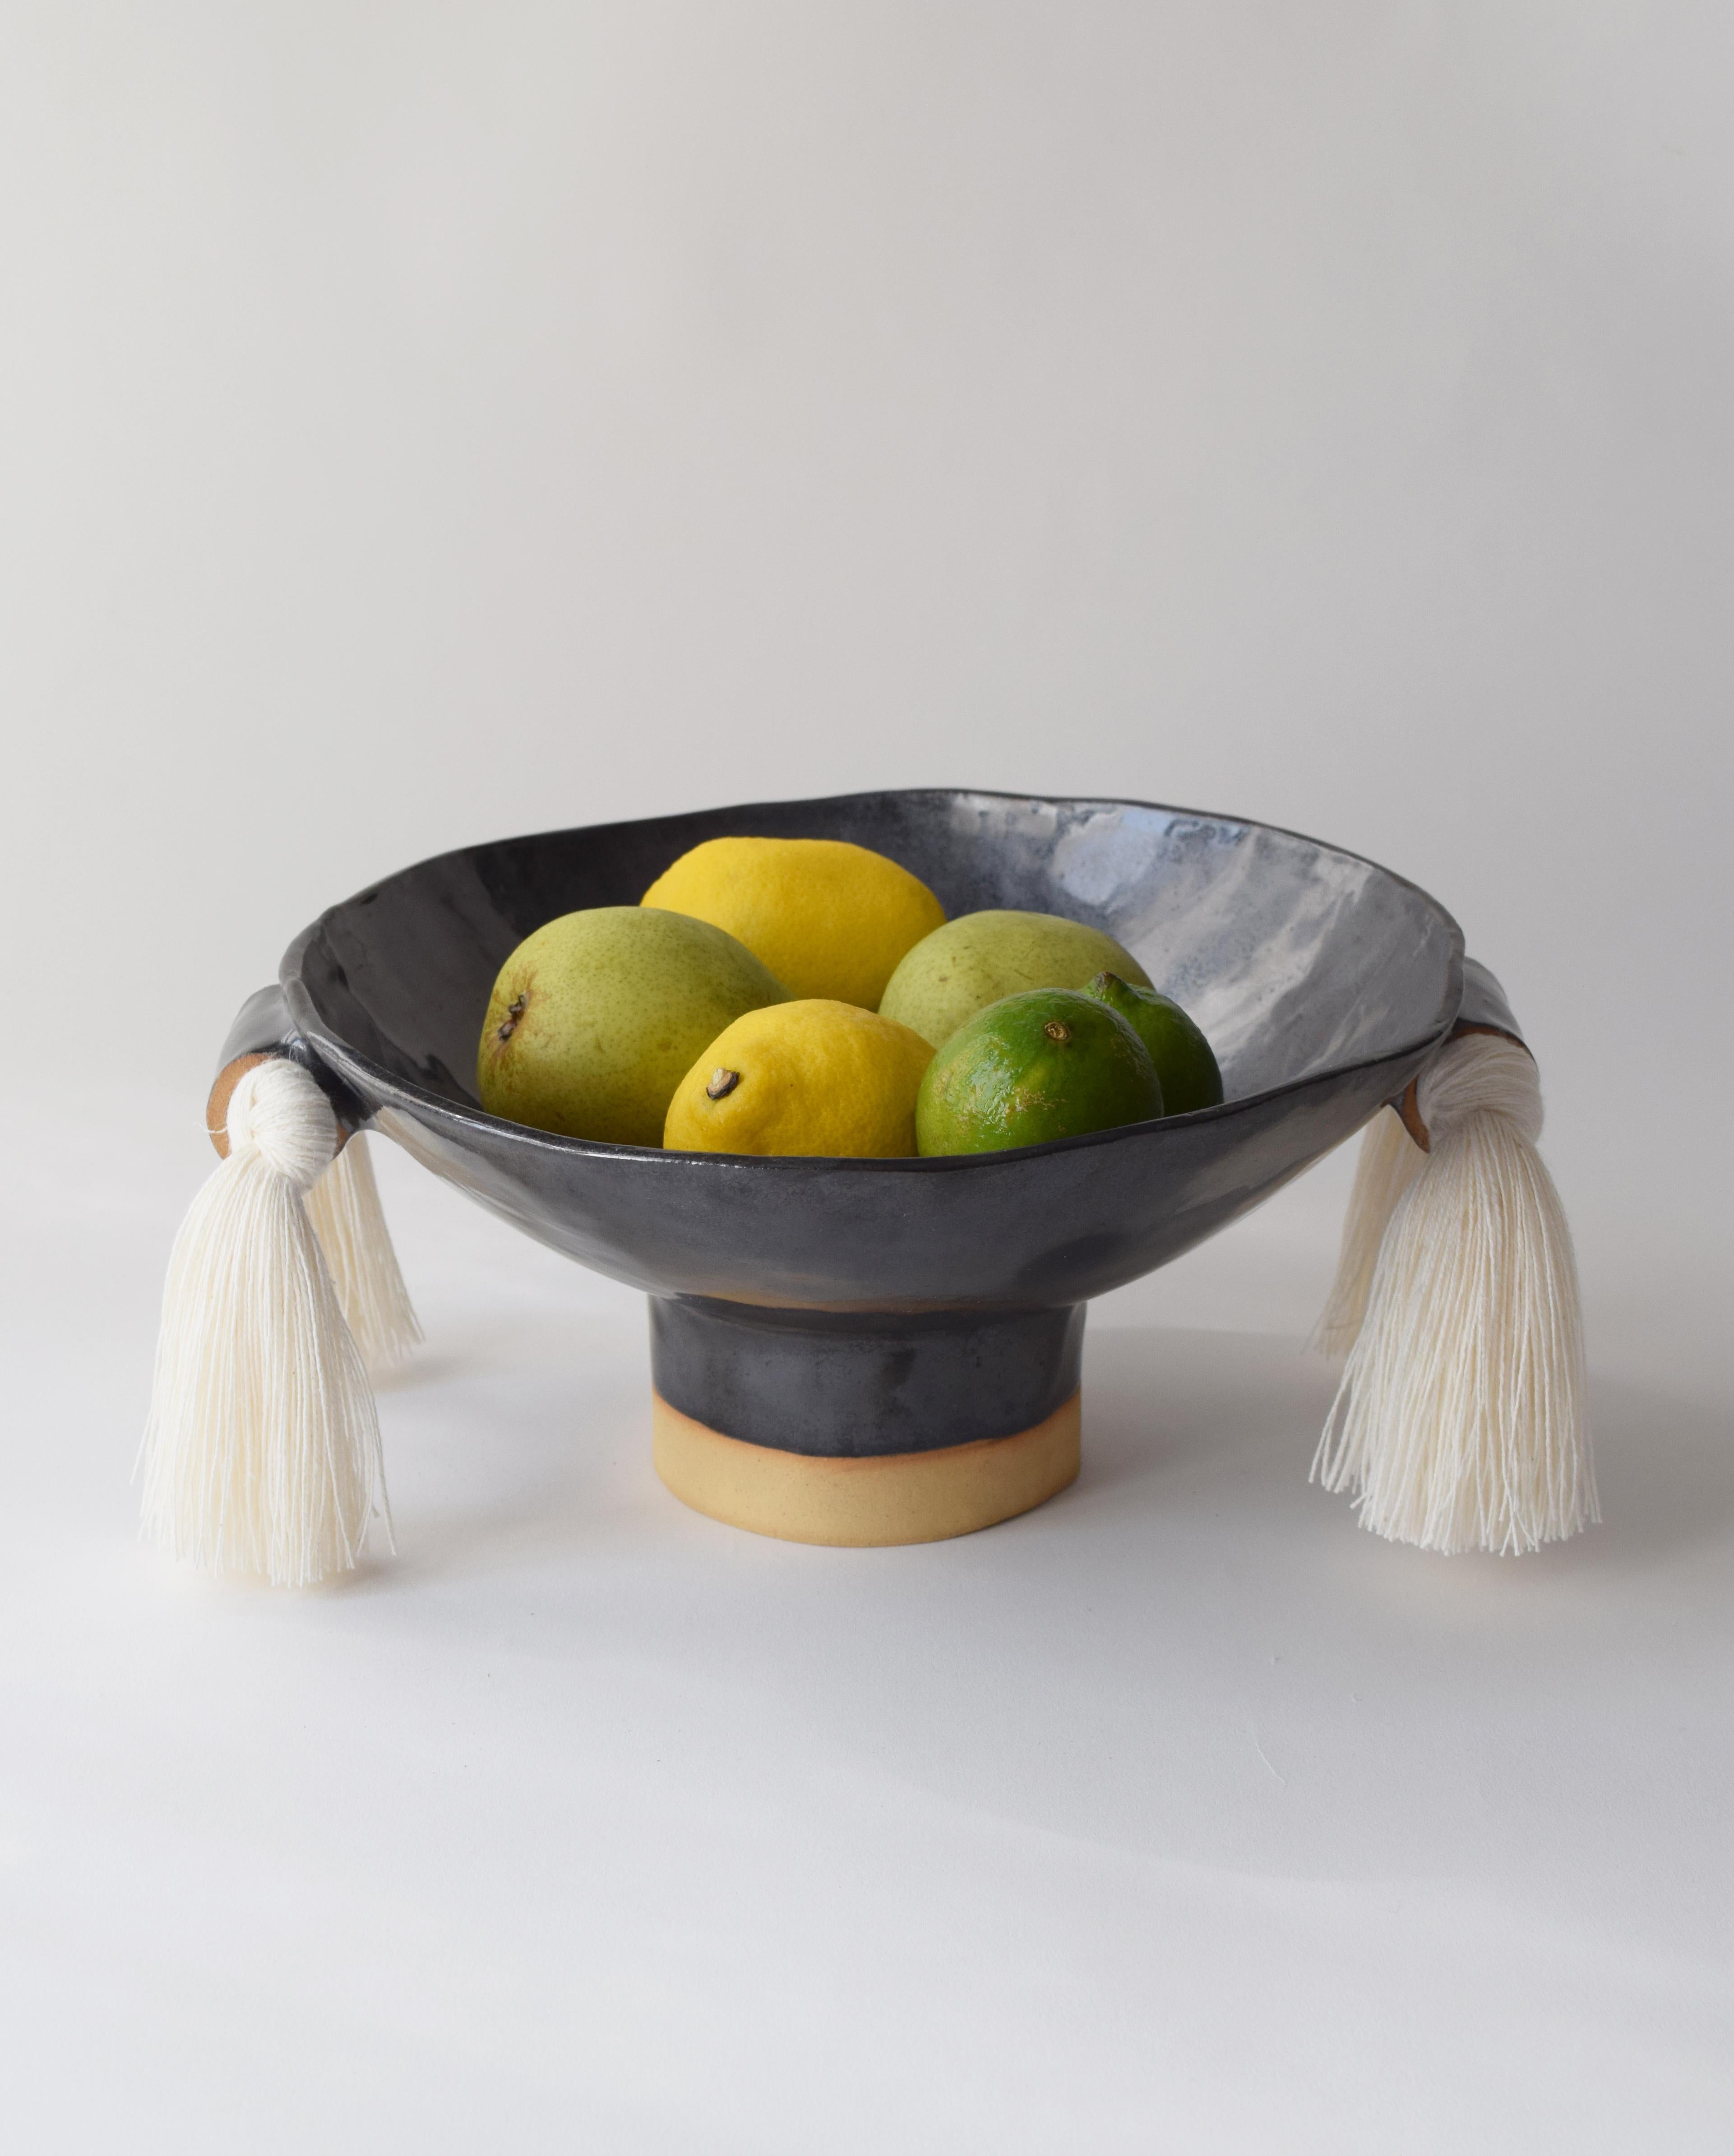 Organic Modern Decorative Ceramic Bowl #697 in Black Glaze with White Cotton Fringe Detail